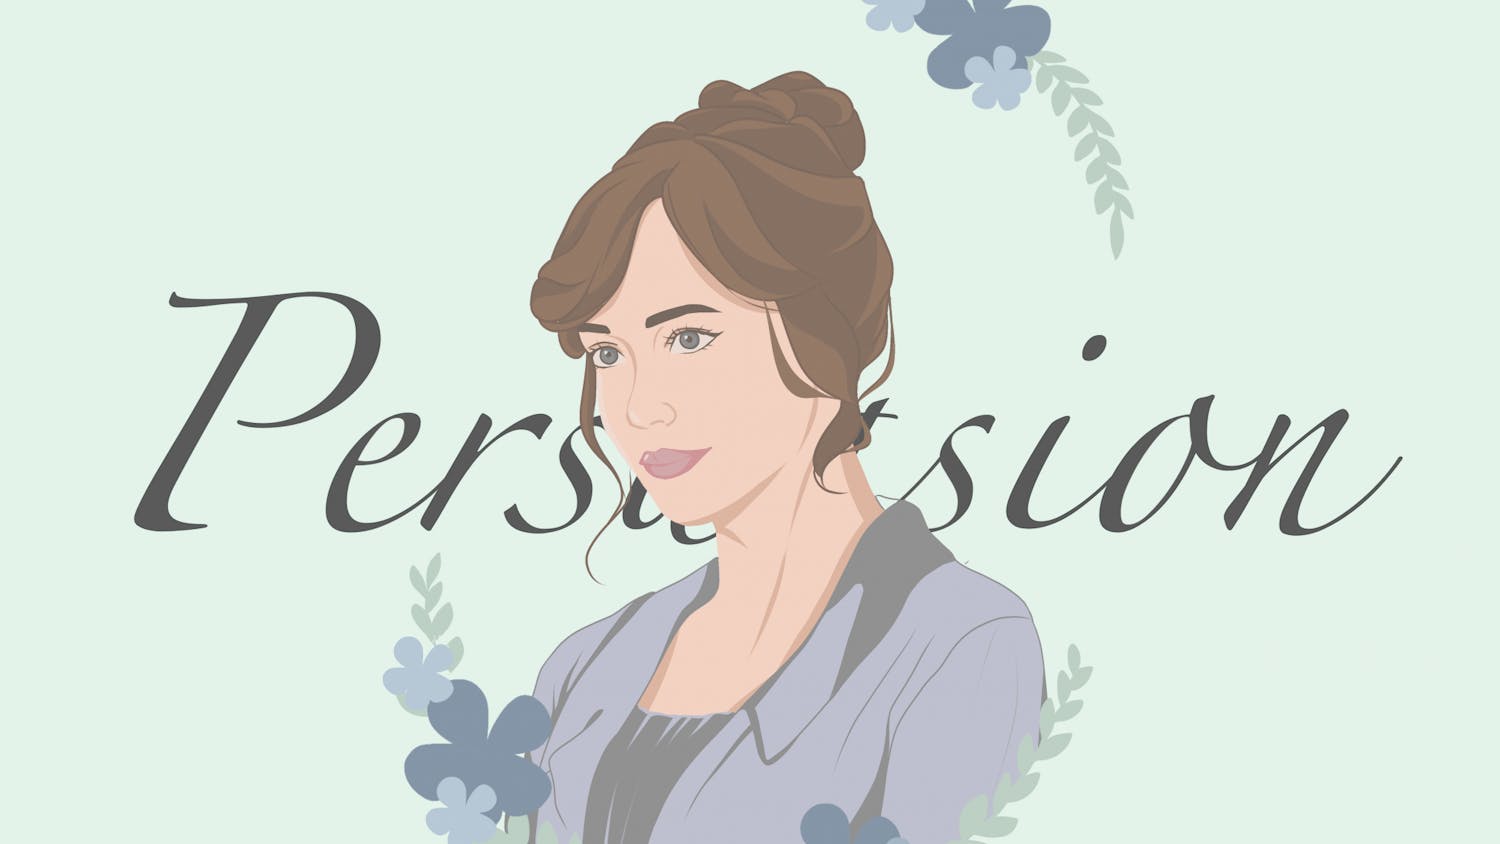 Persuasion Graphic by Elaine Pu